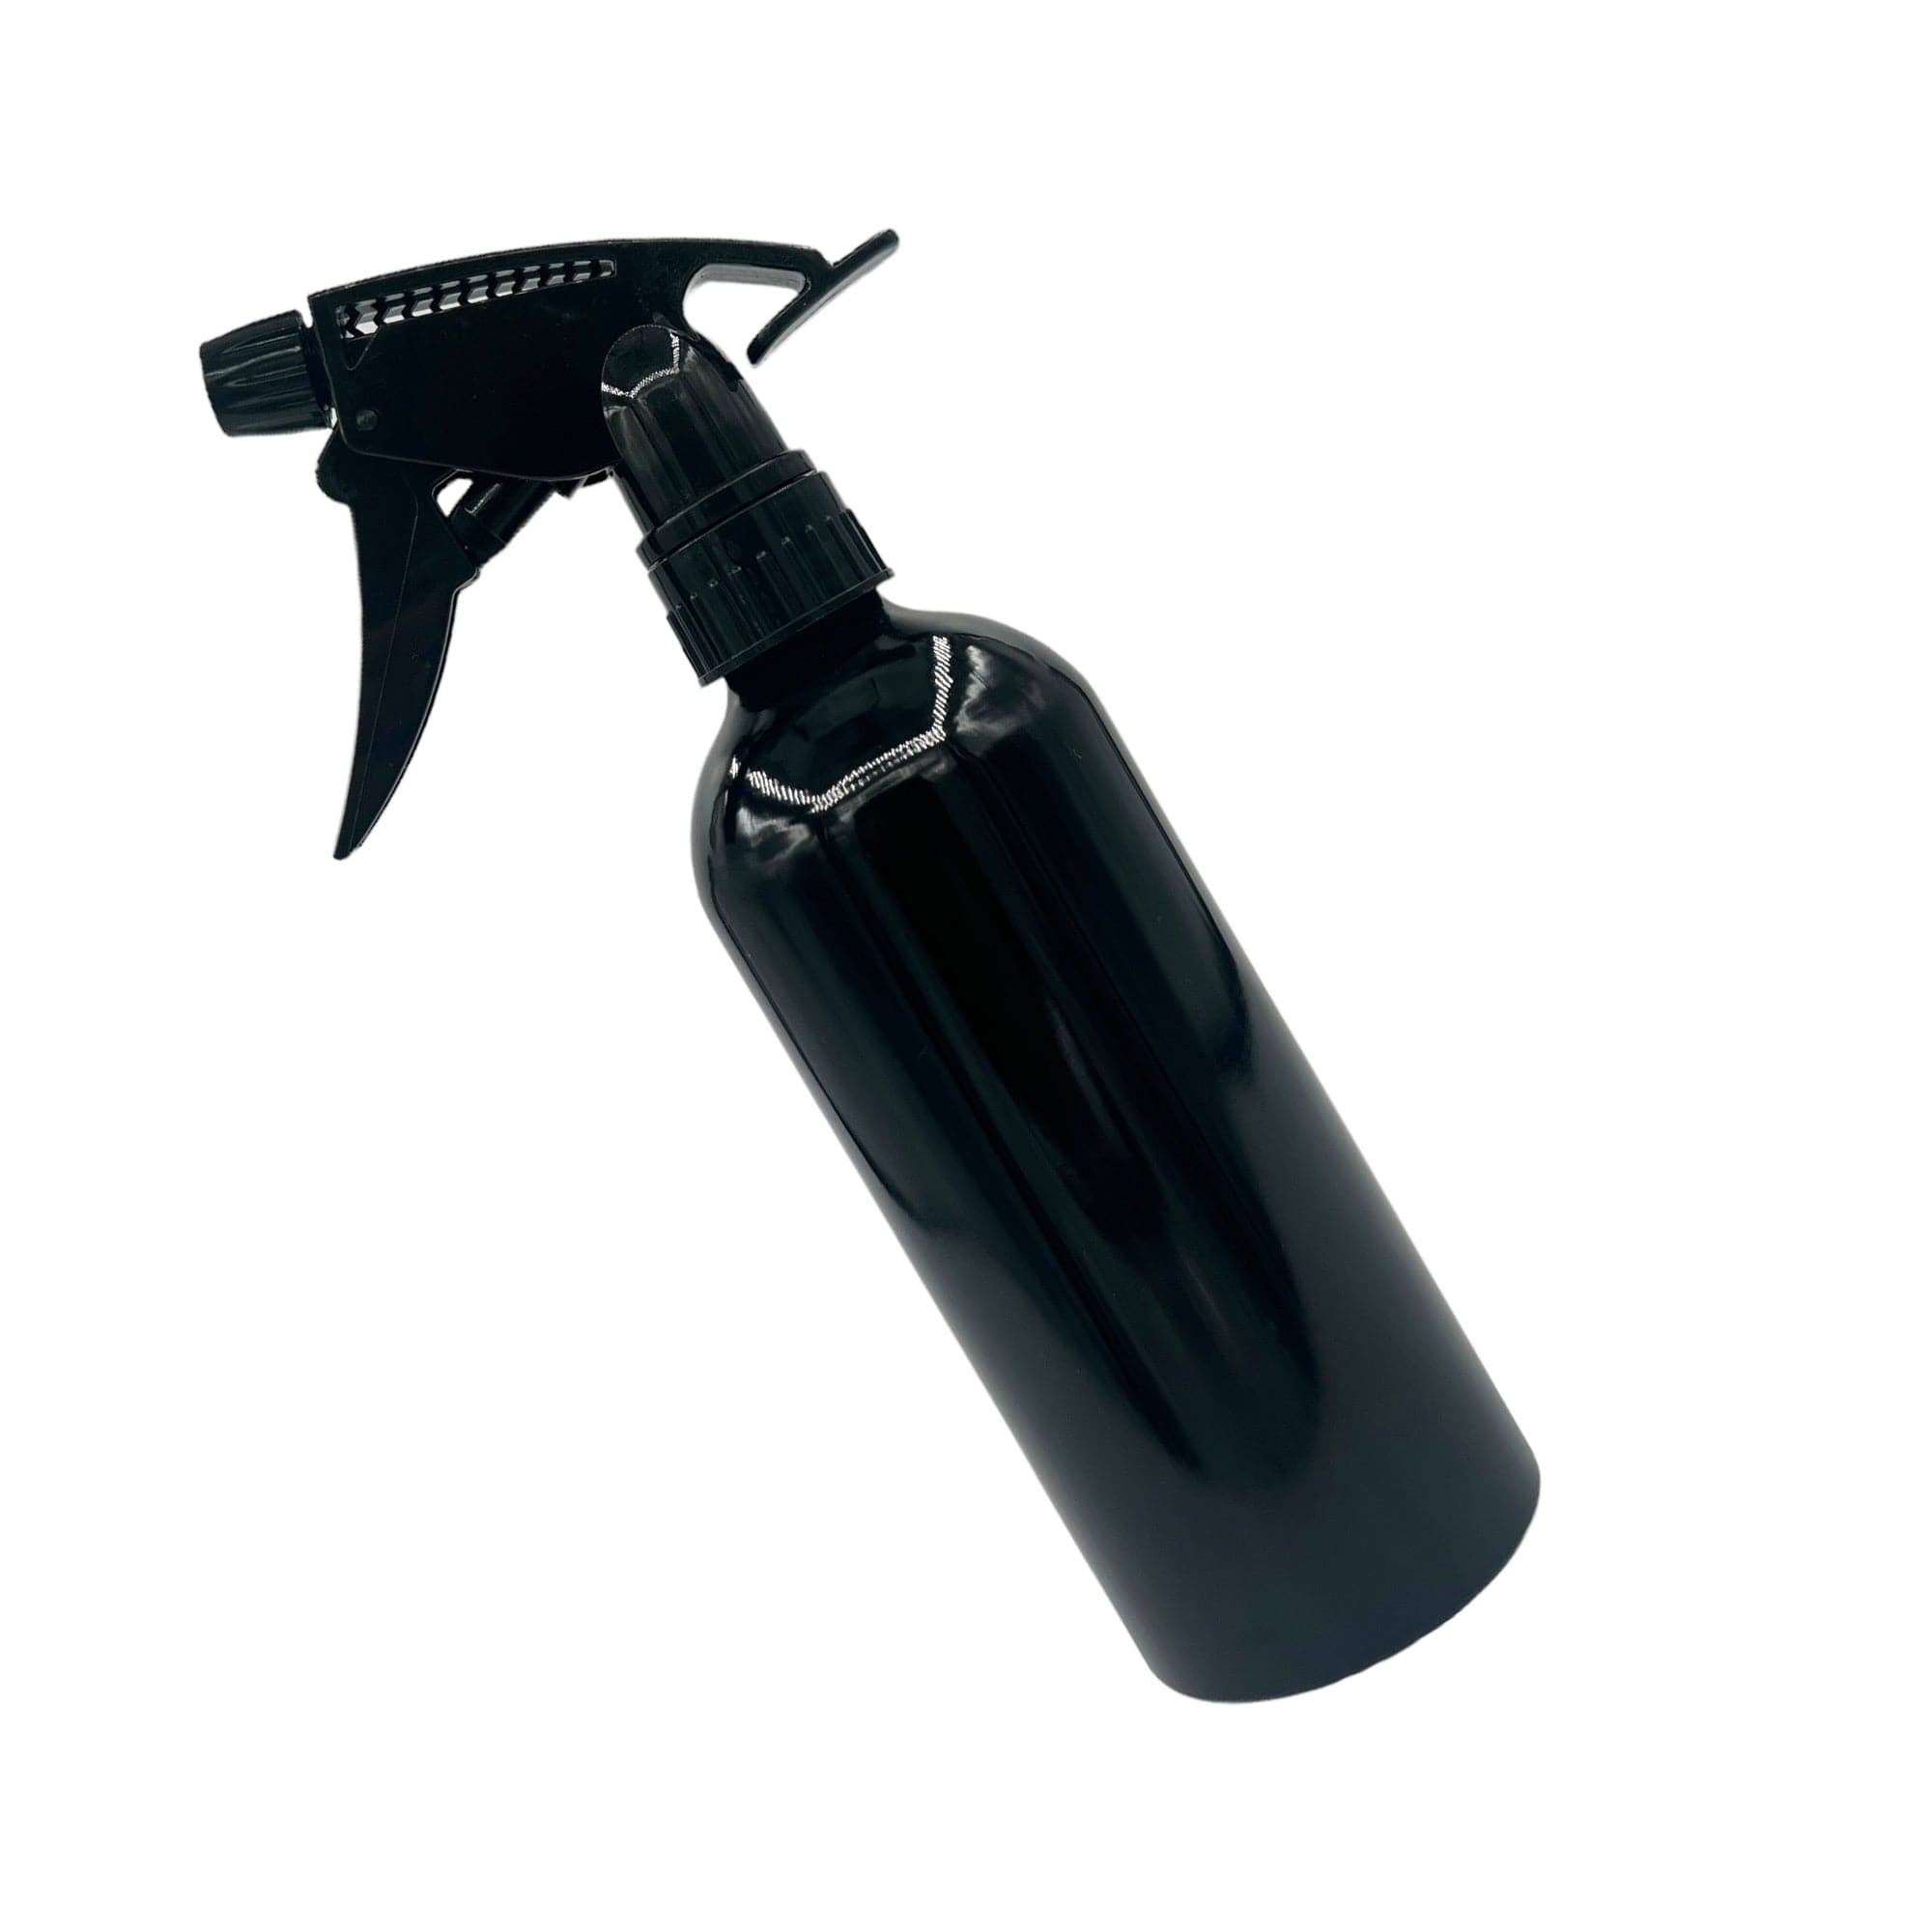 Eson - Hair Water Spray Bottle 500ml Metallic Empty Refillable Ultra Fine Mist Sprayer (Black)